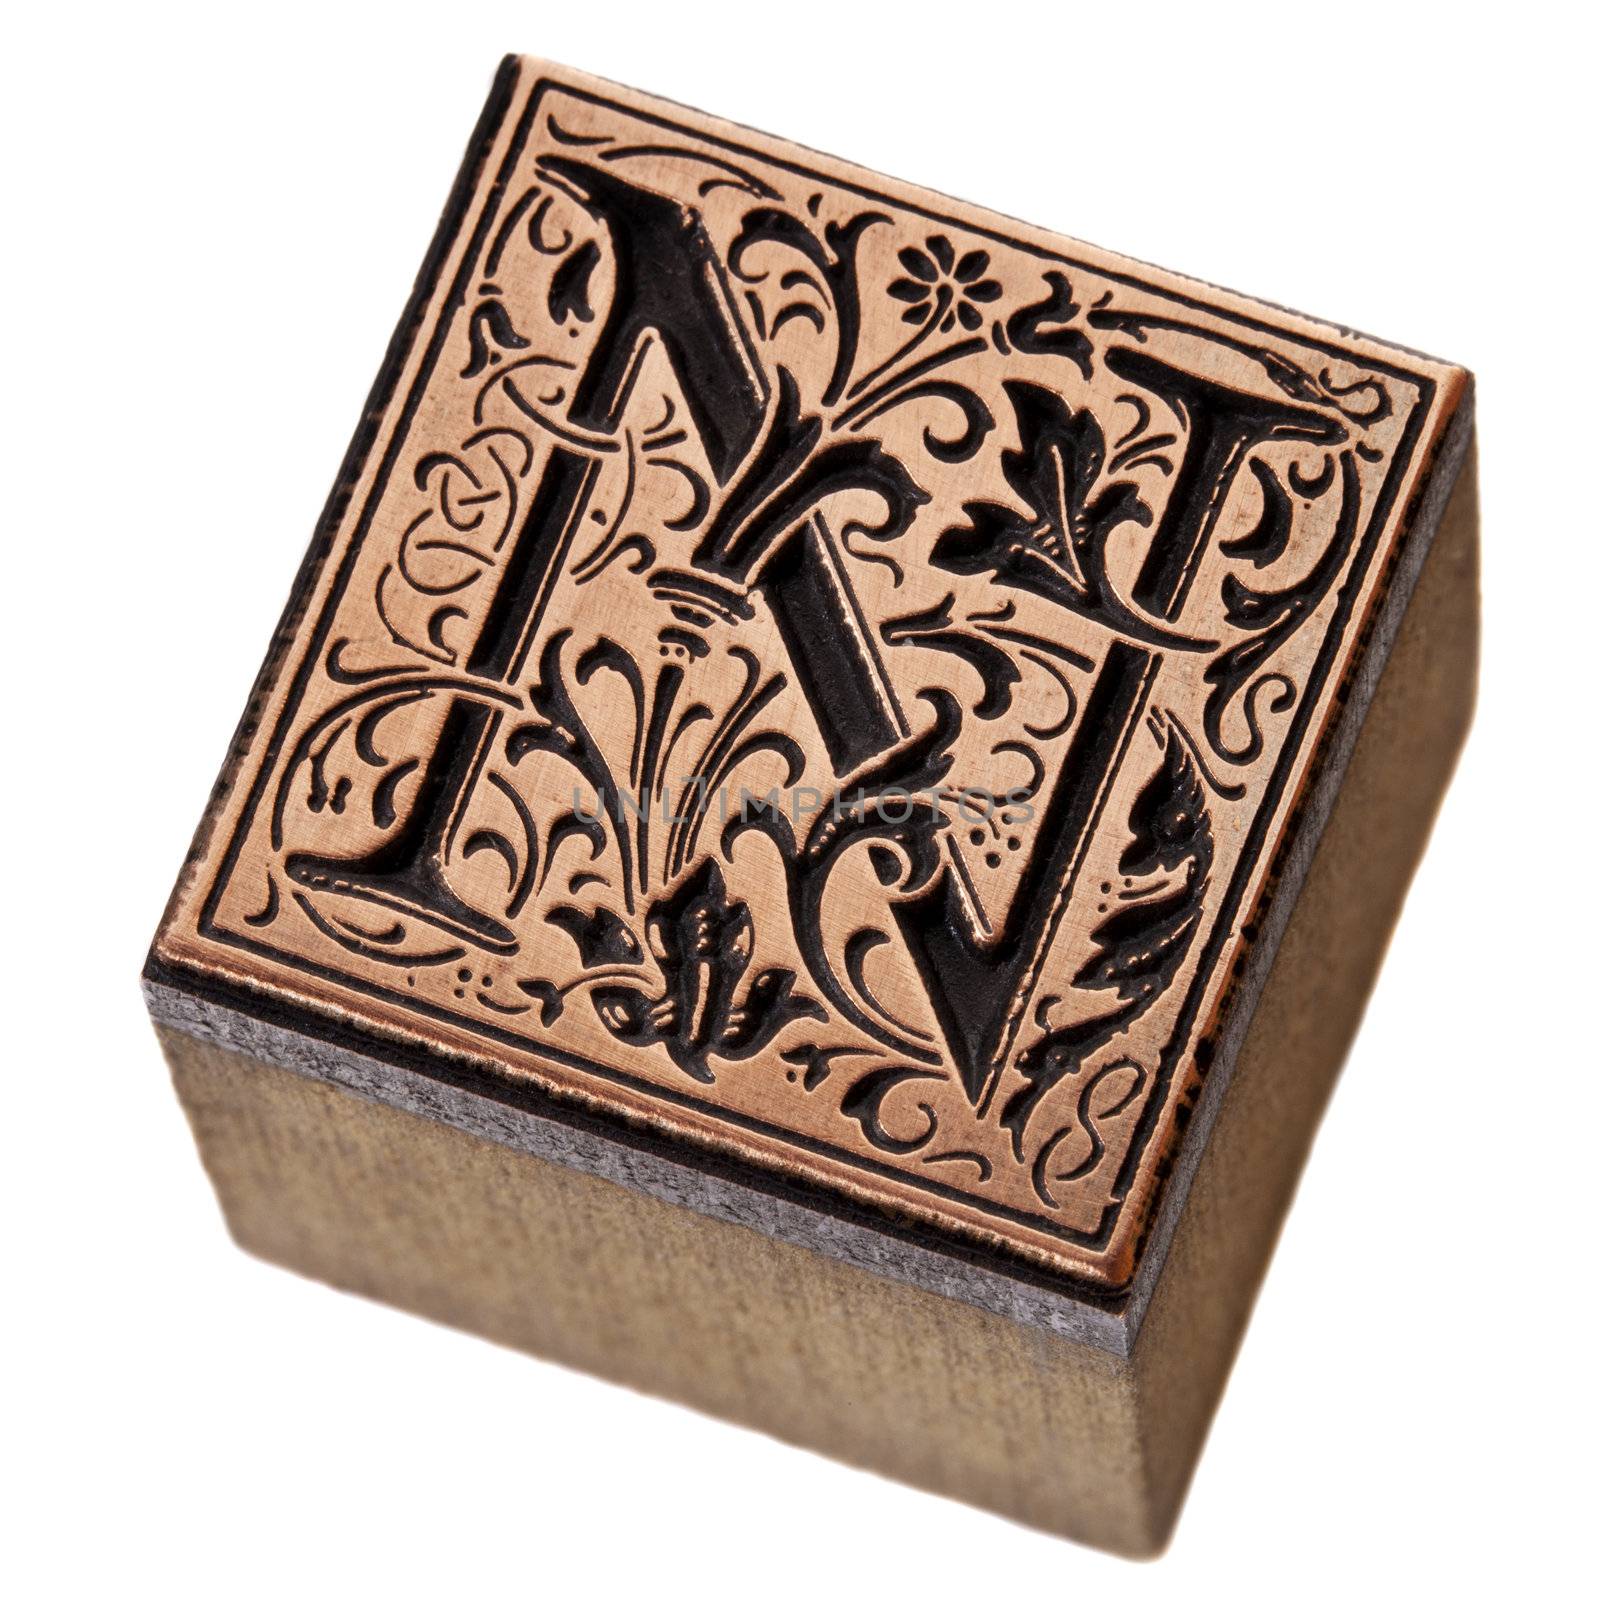 ornamental initial letter N - copper and wood vintage letterpress printing block